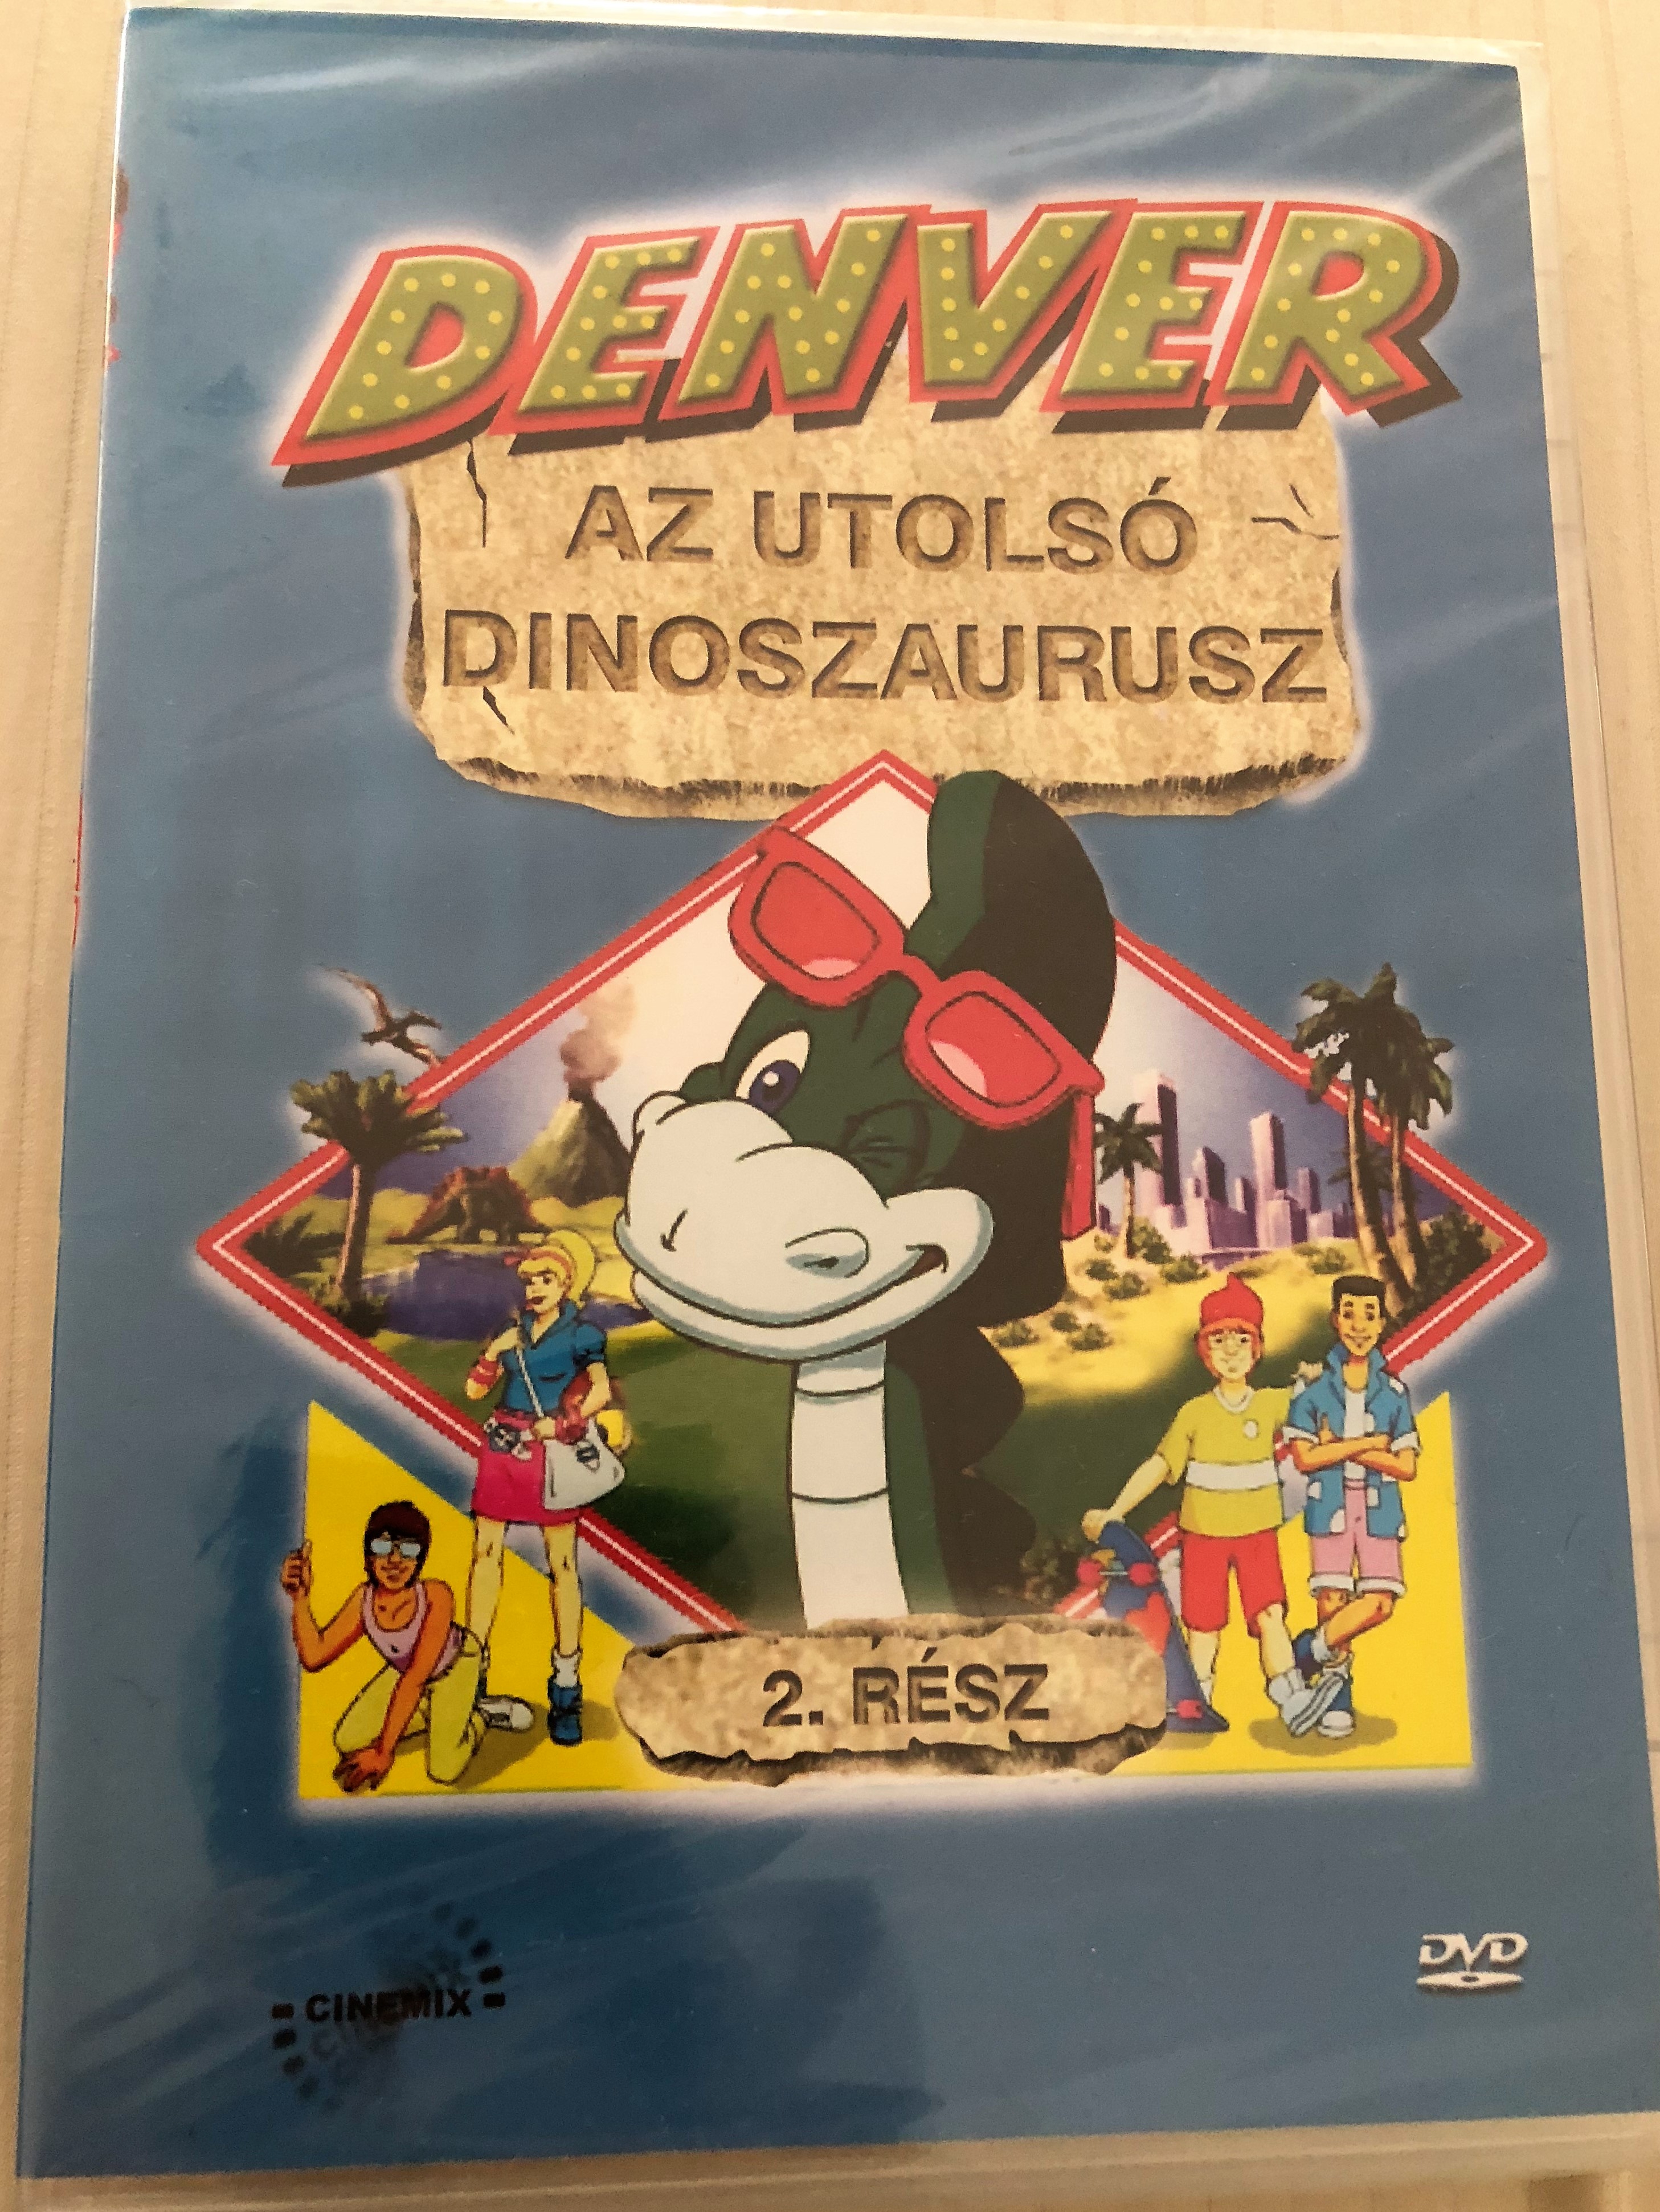 denver-the-last-dinosaur-part-2.-dvd-1988-denver-az-utols-dinoszaurusz-2.-r-sz-created-by-peter-keefe-1-.jpg